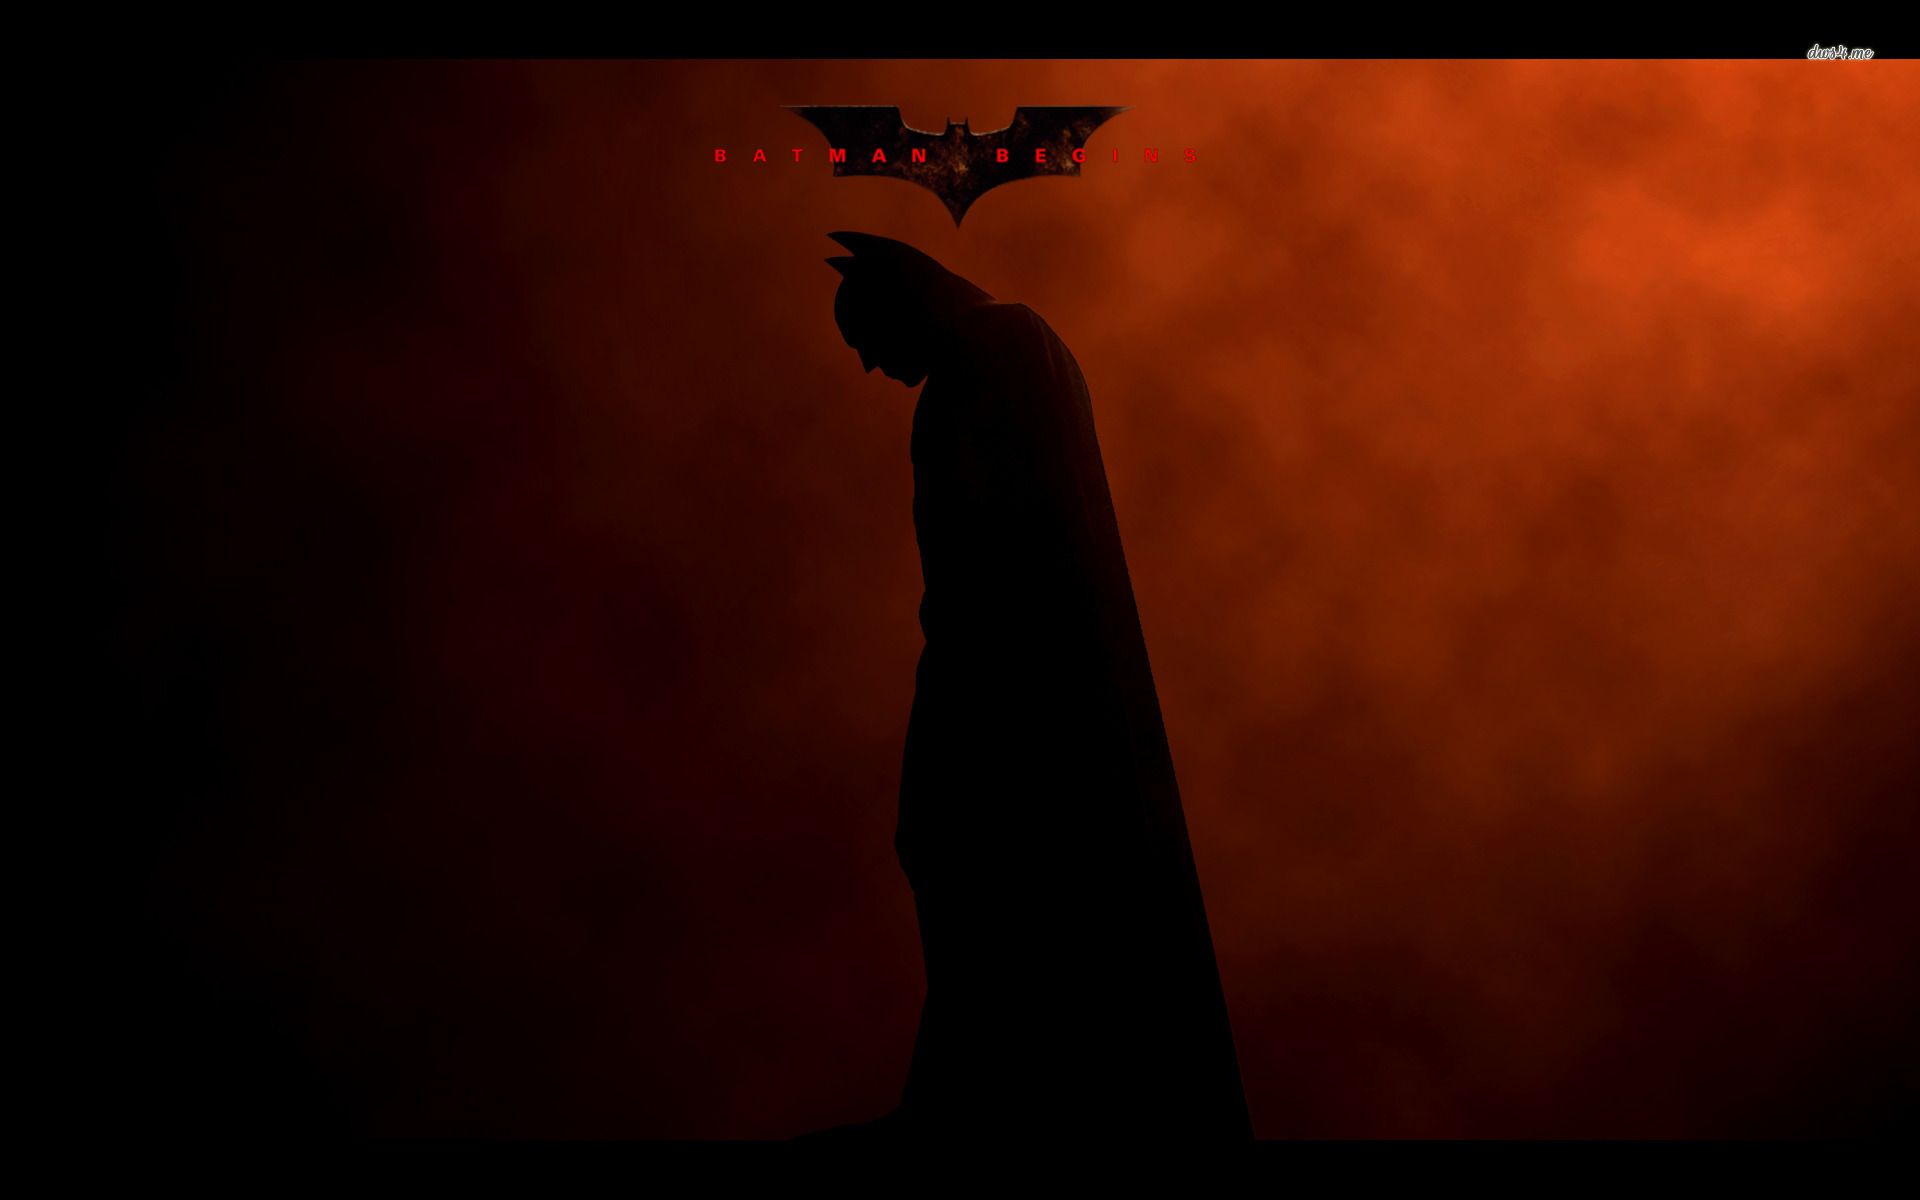 Batman logo and shadow wallpaper | Wallpaper Wide HD